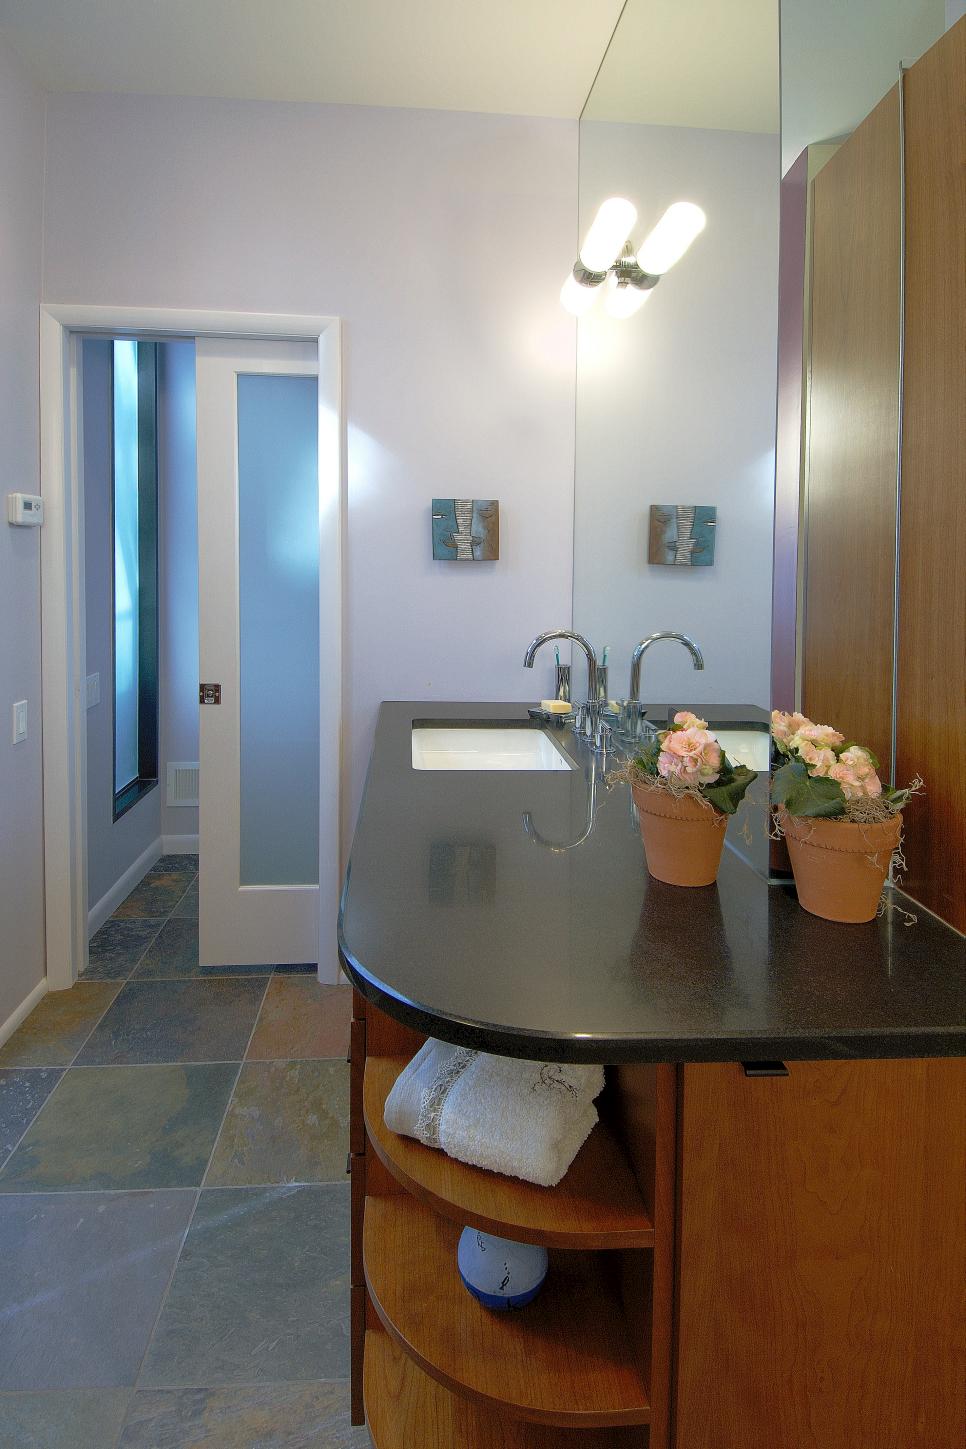 Stylish Modern Vanities Provide Storage in Eclectic Bathroom | HGTV